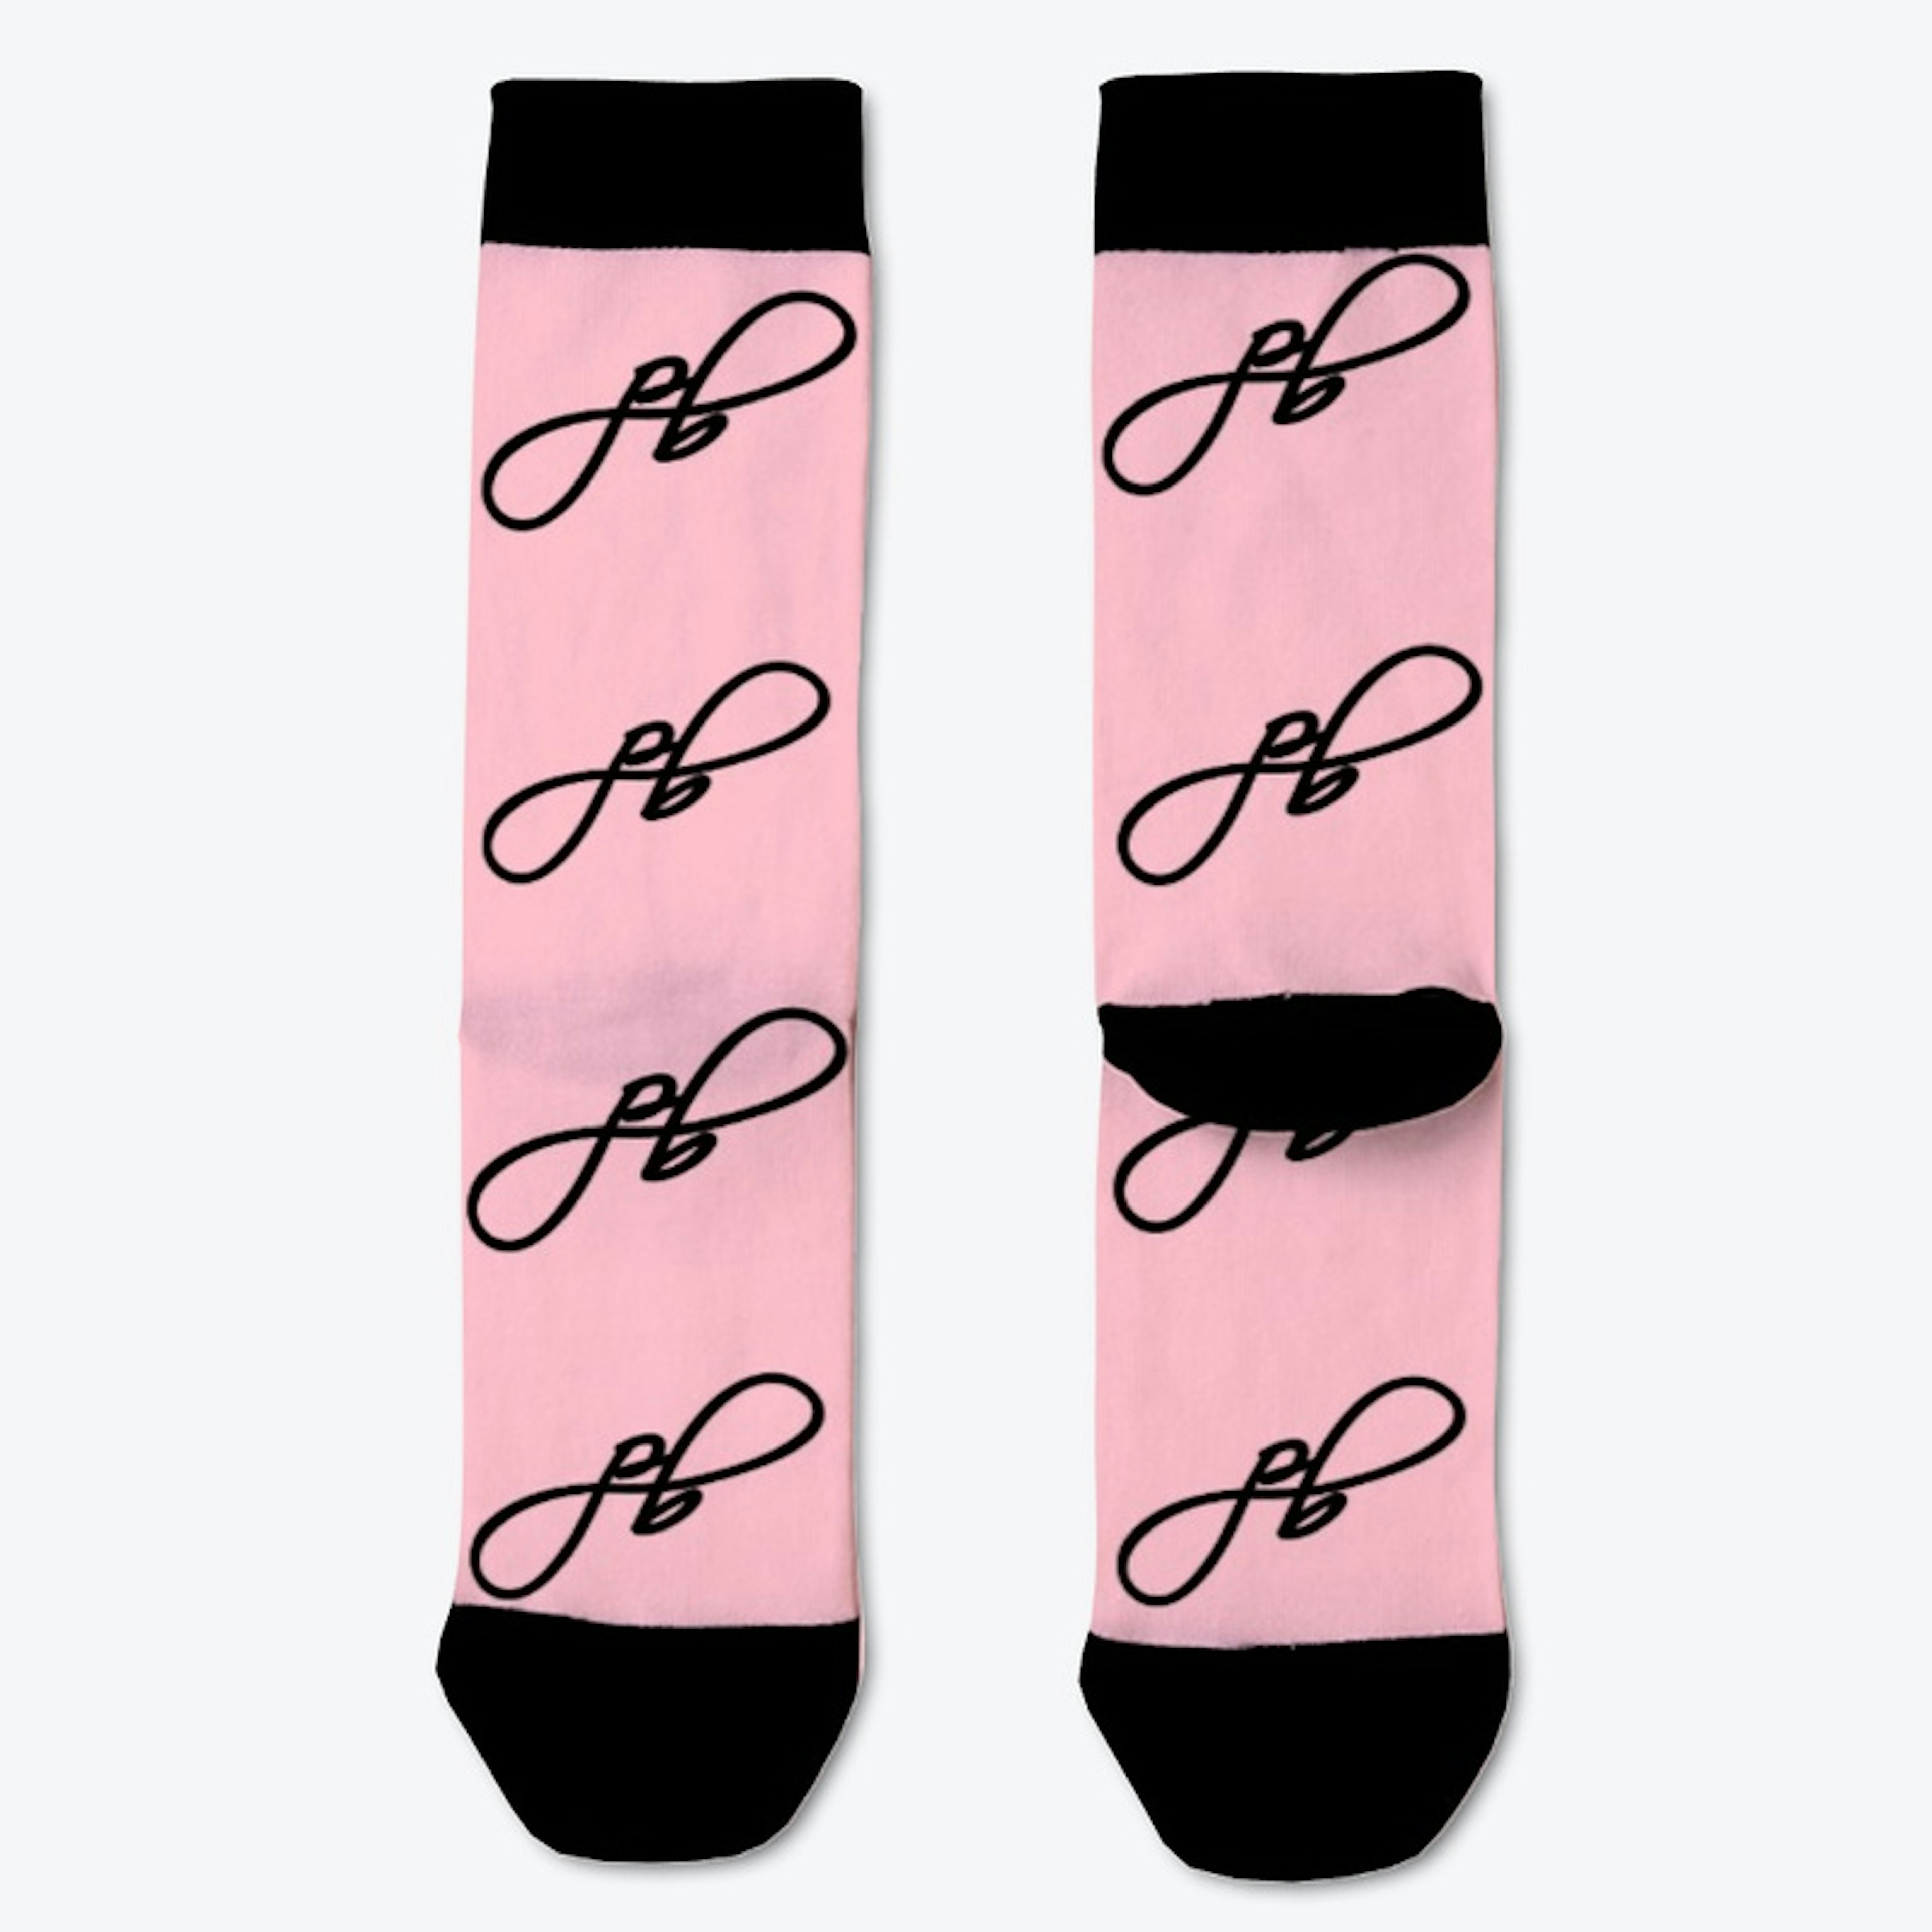 PB Infinity Socks